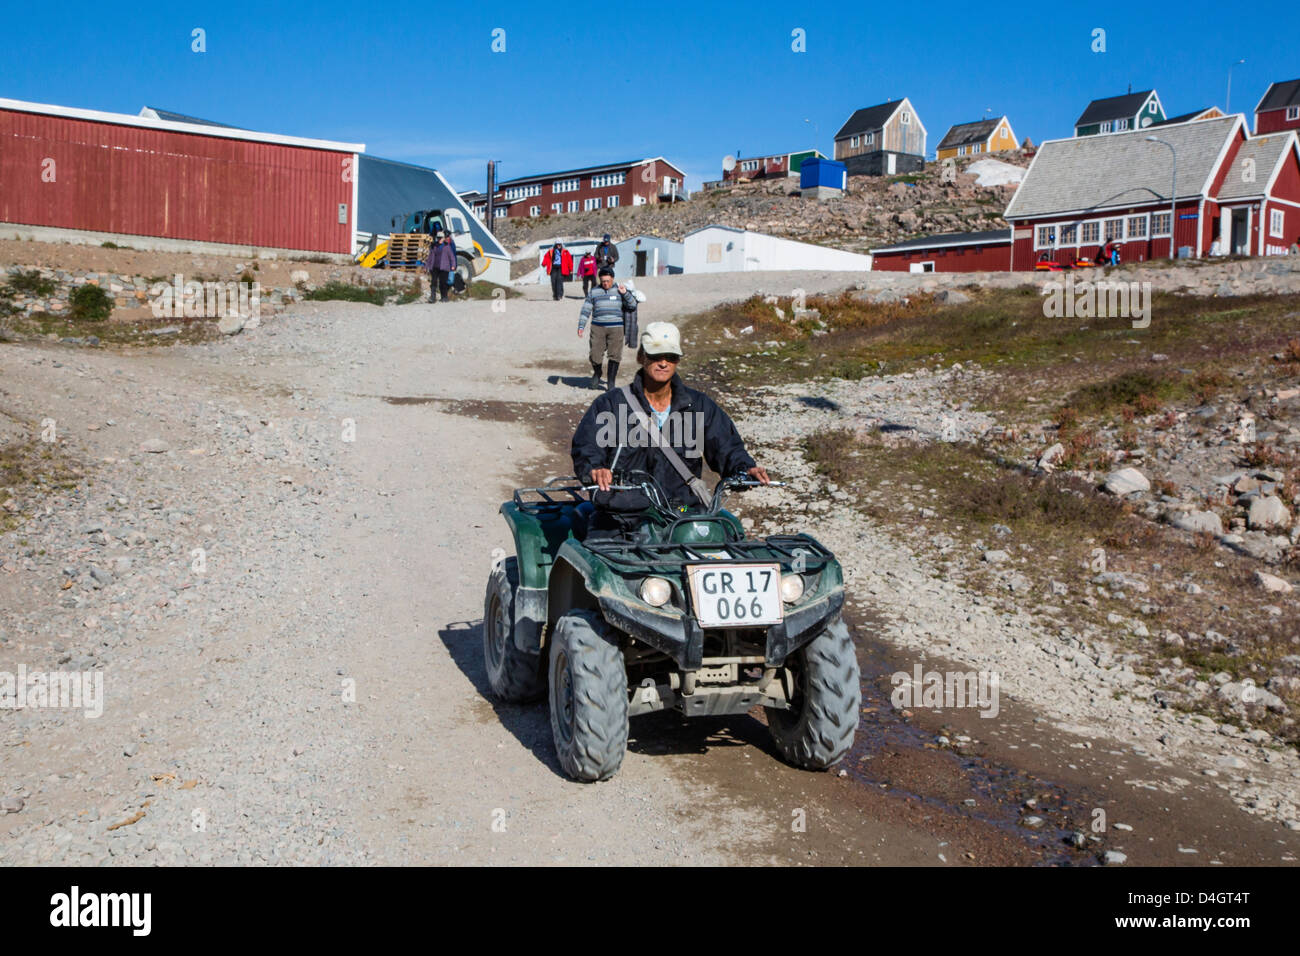 Inuit village, Ittoqqortoormiit, Scoresbysund, Northeast Greenland, Polar Regions Stock Photo